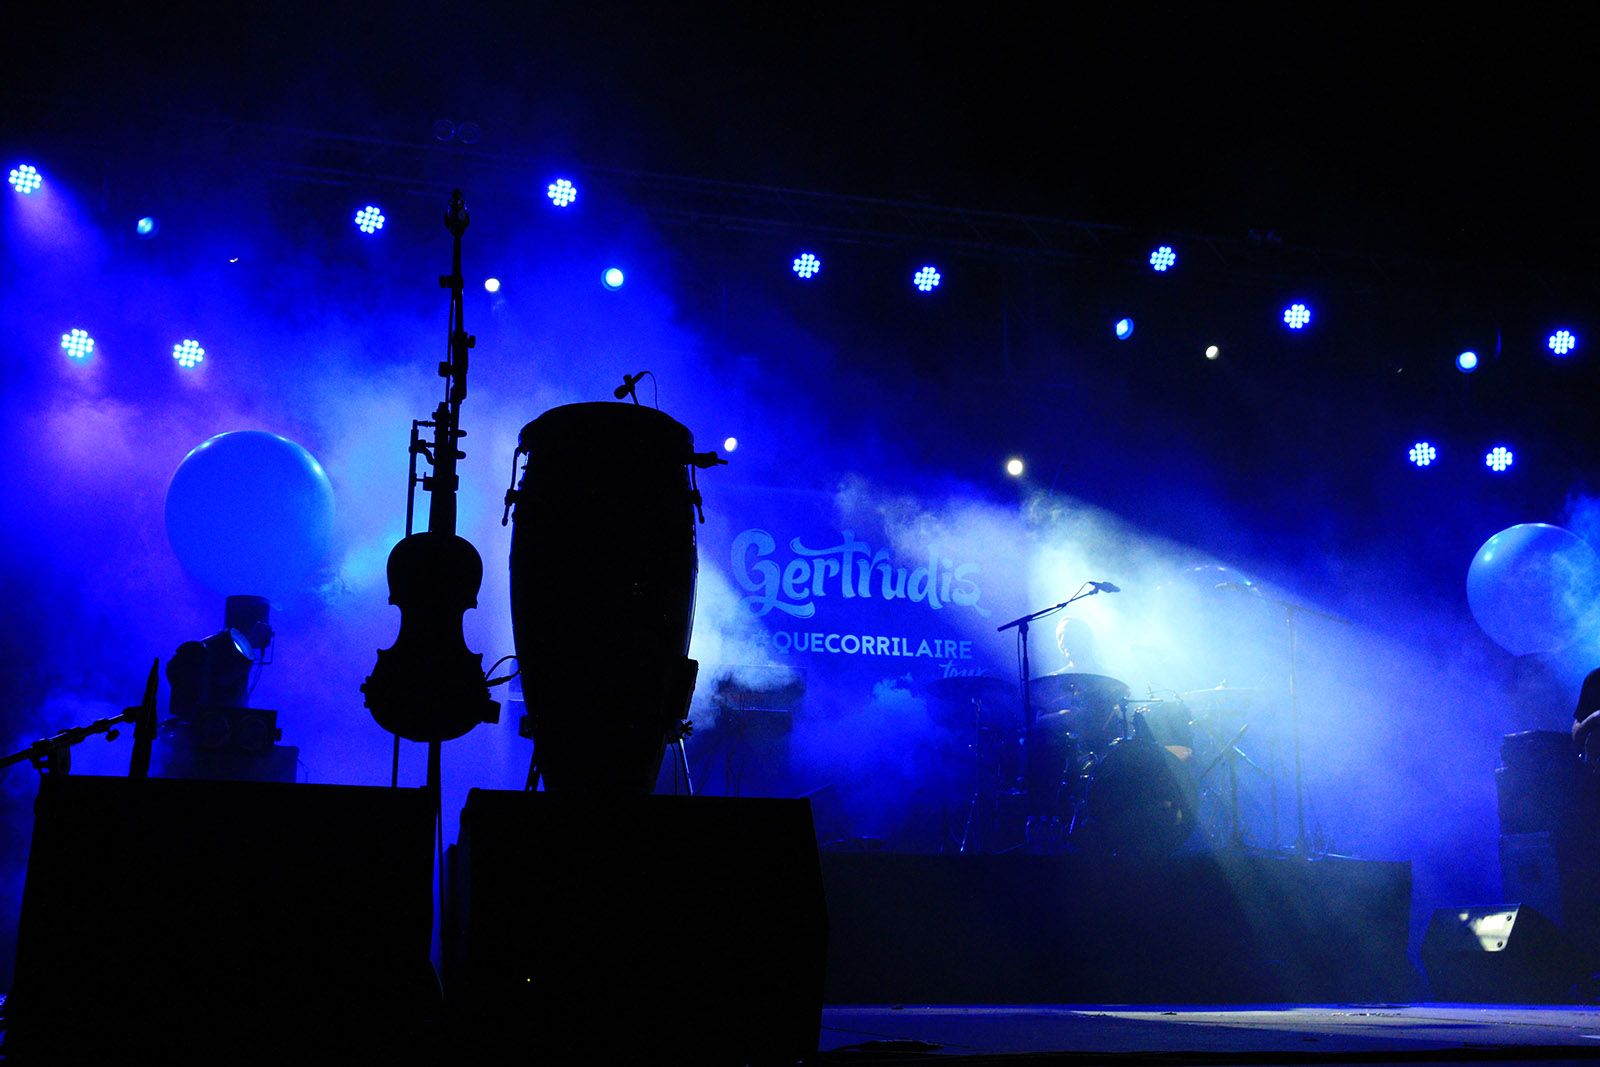 Concert de "Gertrudis".Foto: Lali Álvarez